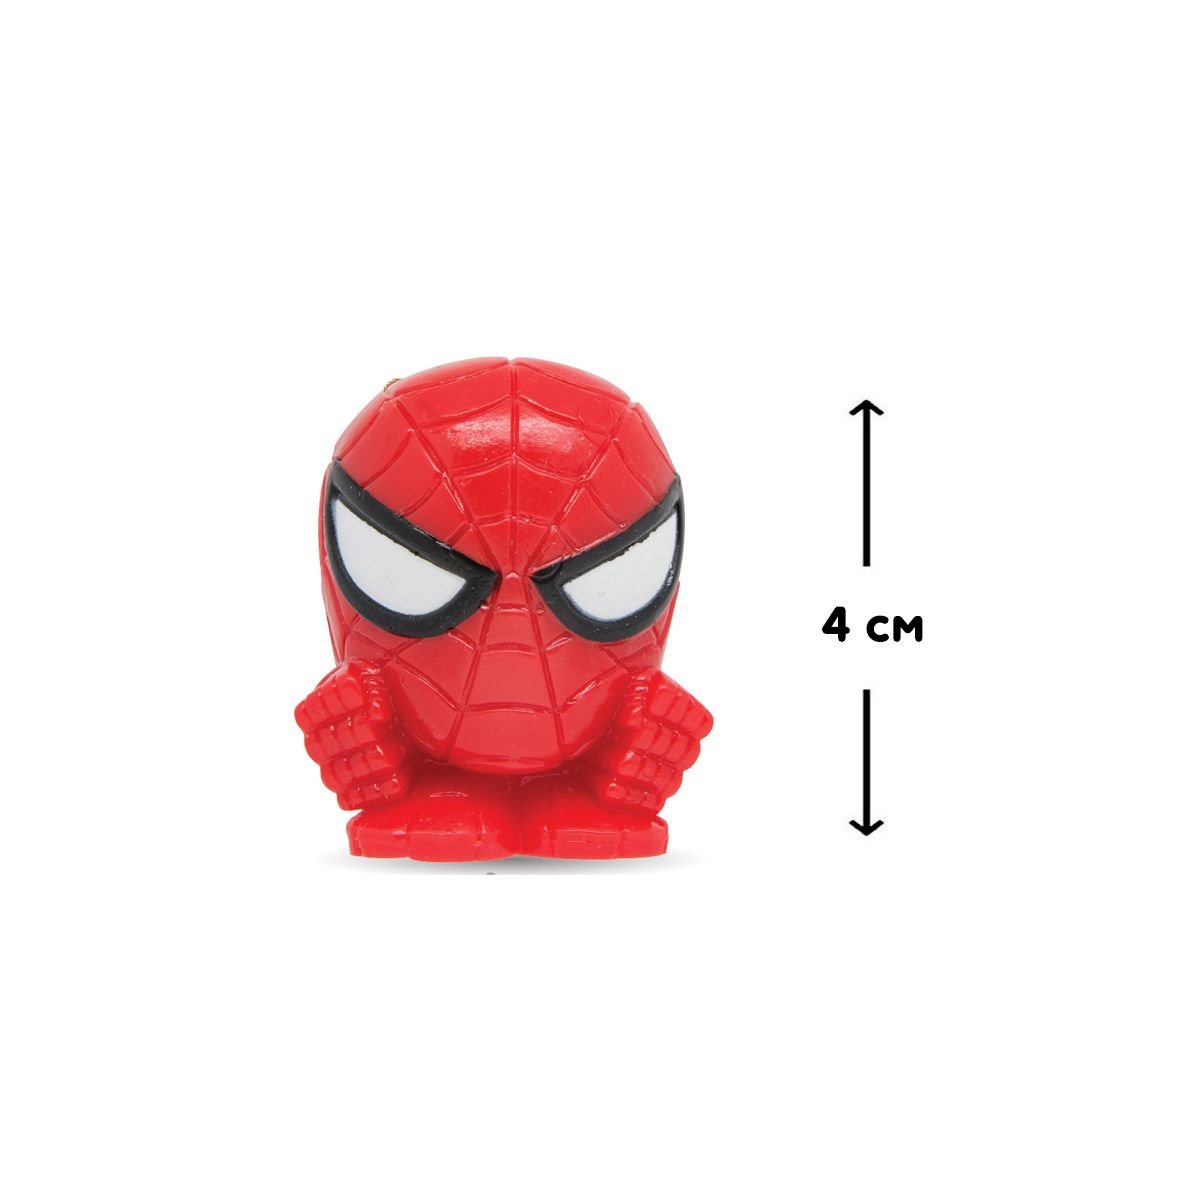 Іграшка-сюрприз у кулі Mashʼems – Людина-павук